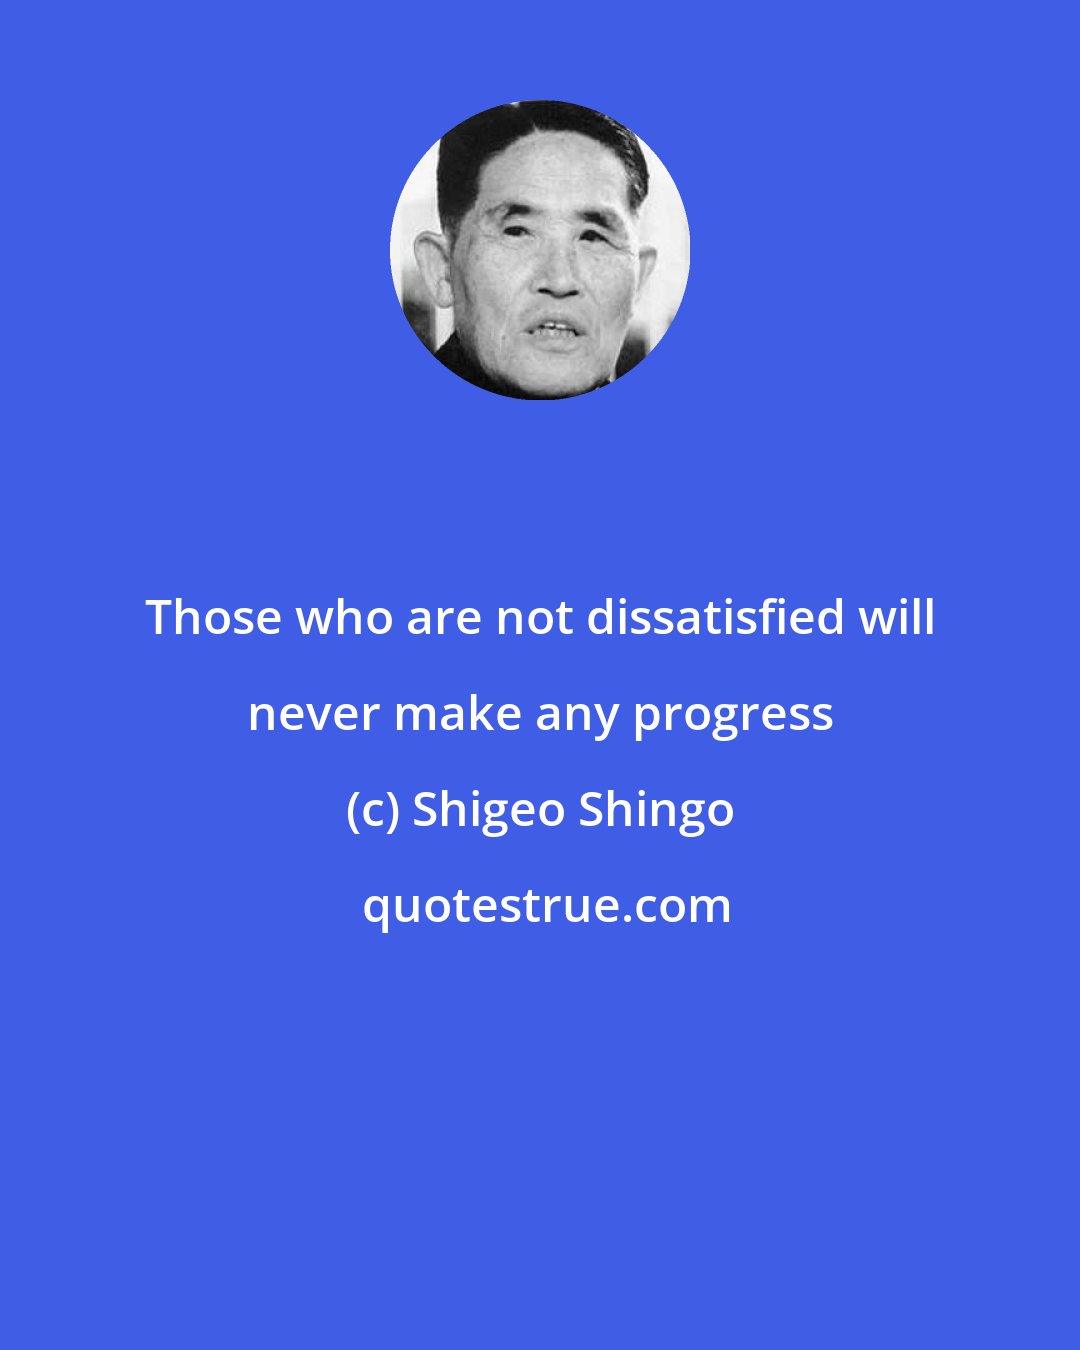 Shigeo Shingo: Those who are not dissatisfied will never make any progress